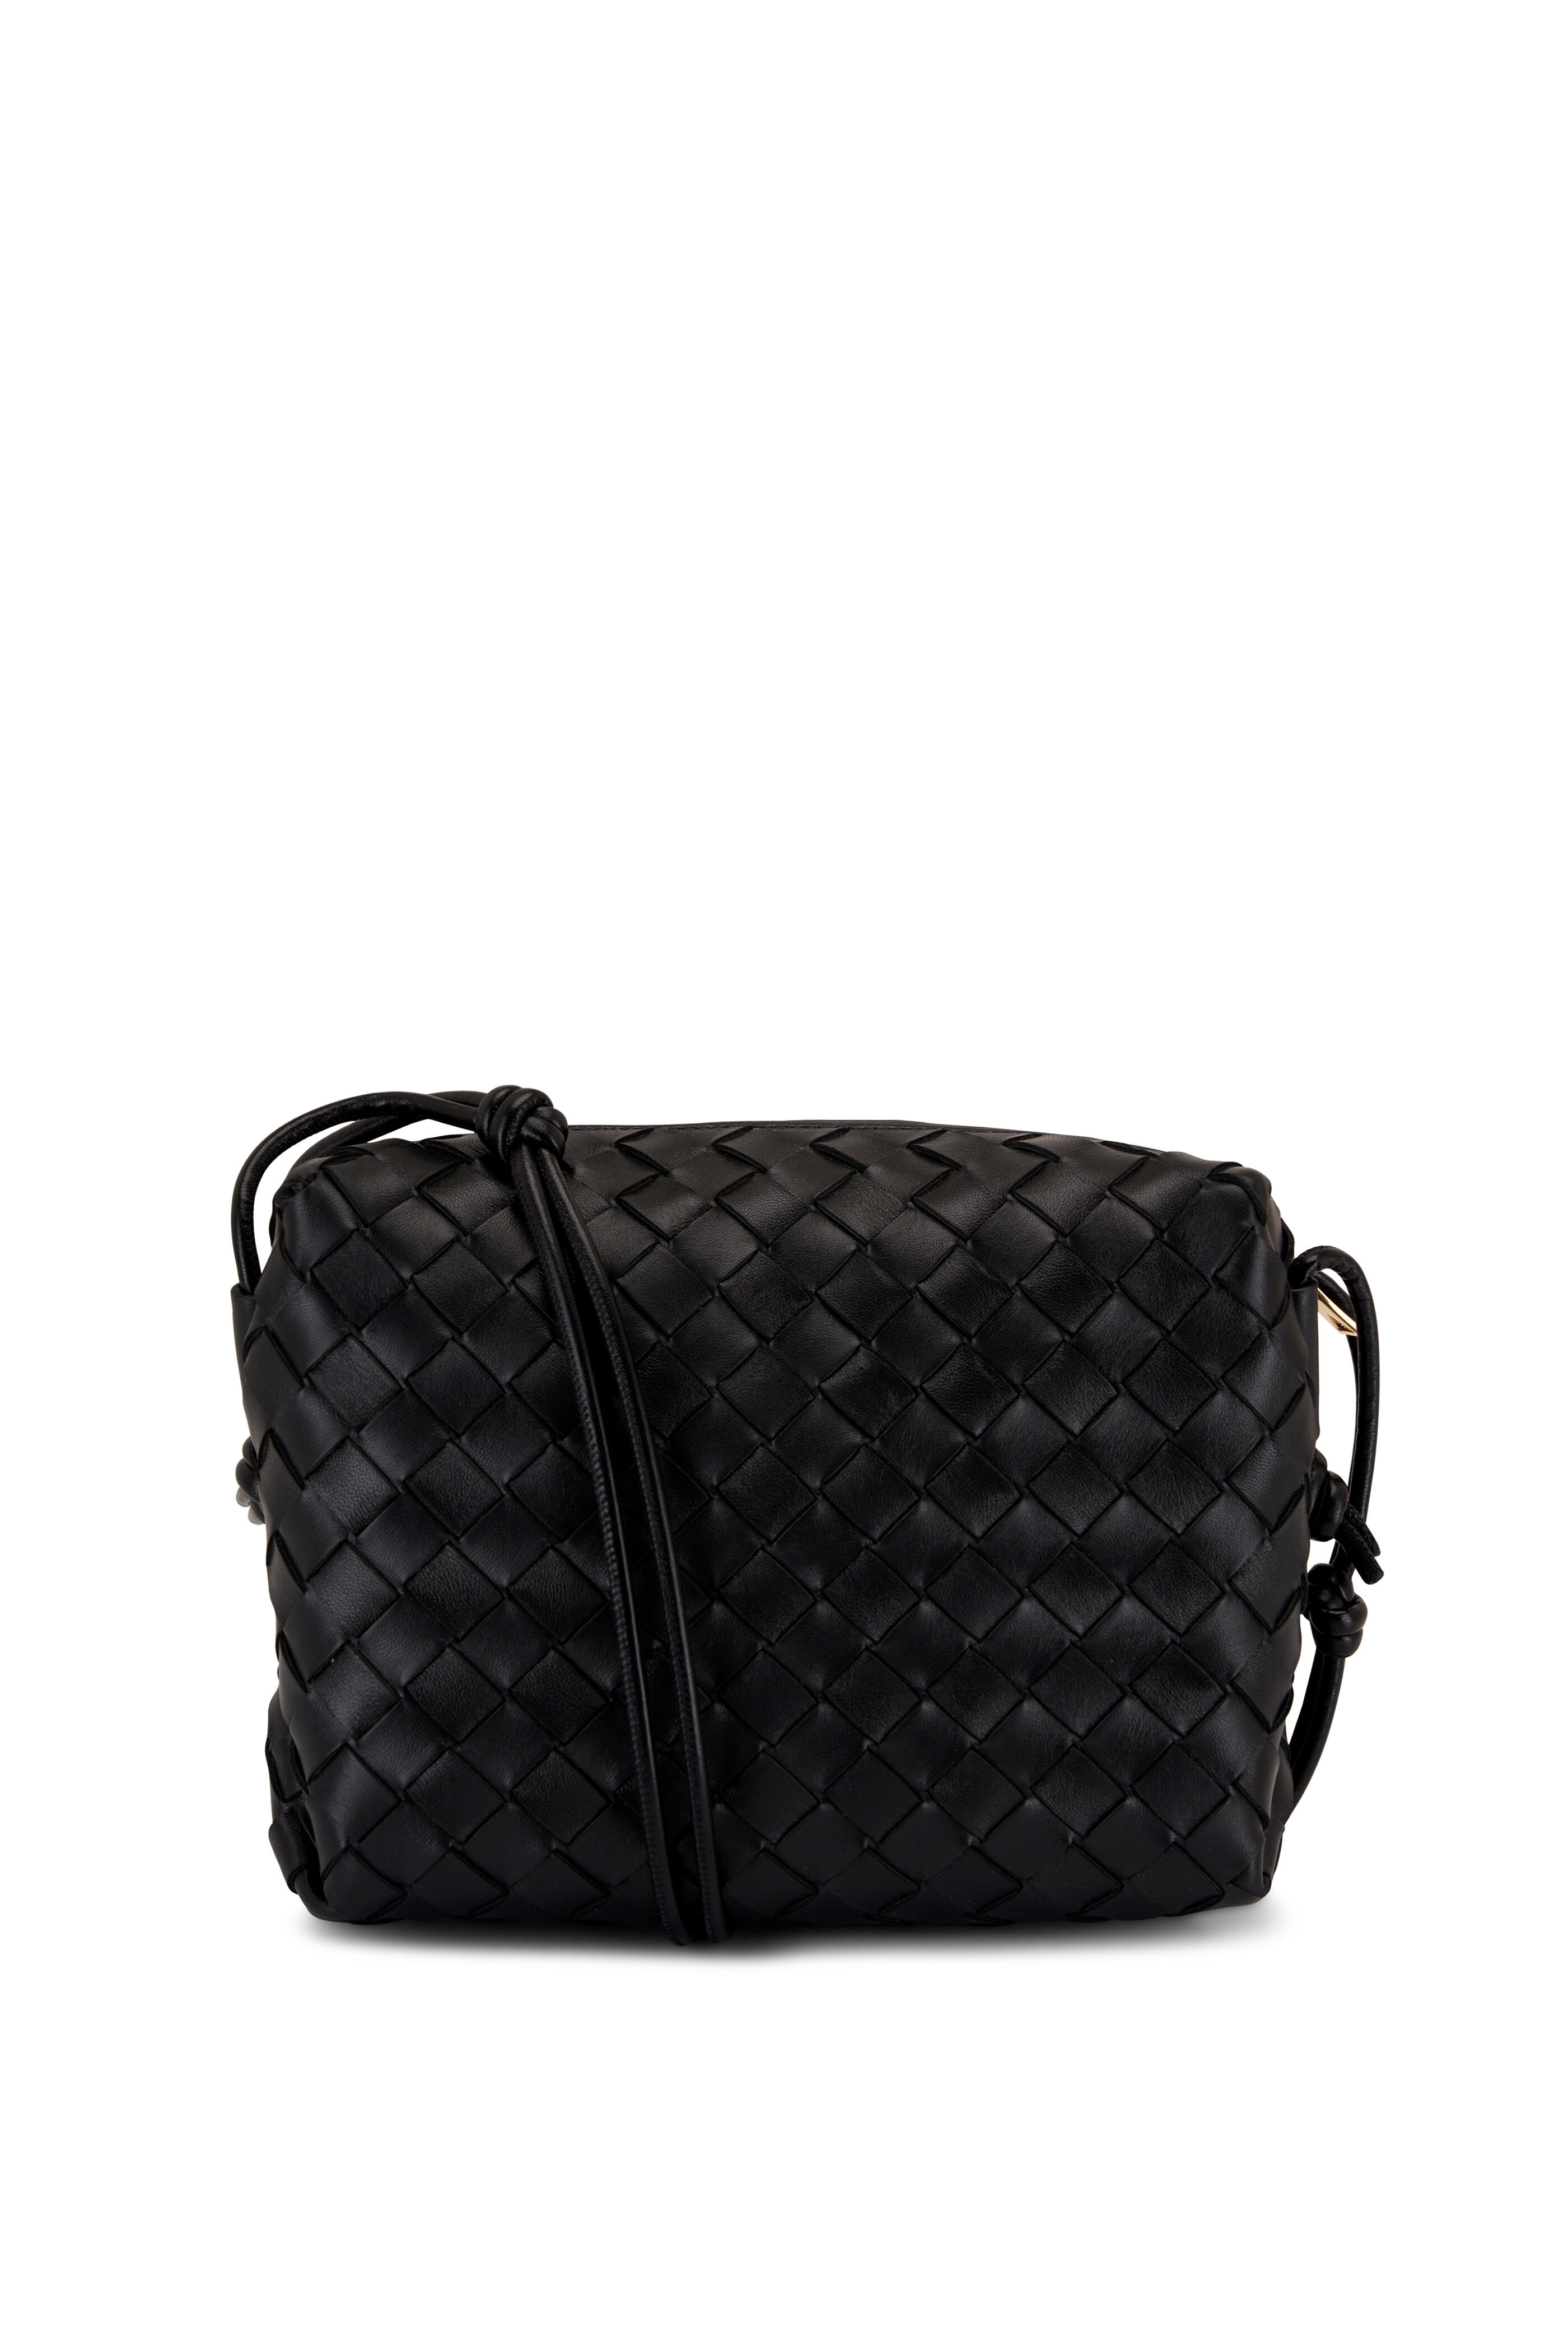 Bottega Veneta Leather Intrecciato Loop Cross-body Bag - Grey - One Size